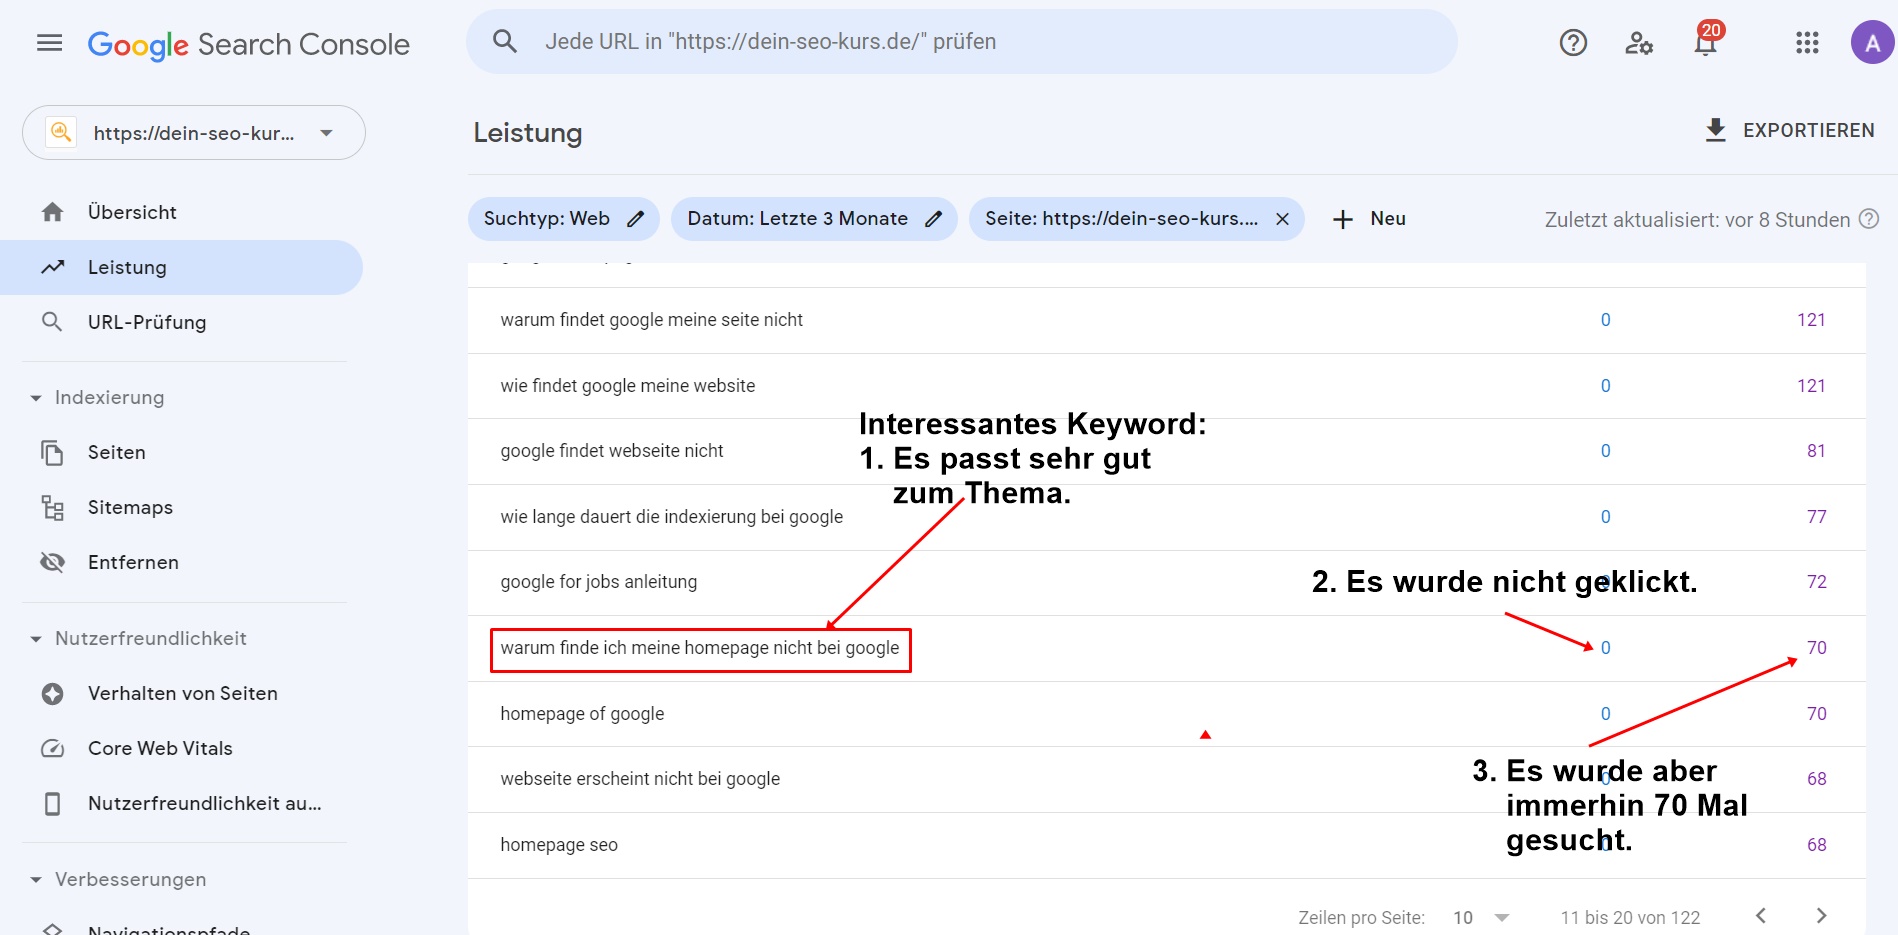 Keywordrecherche Google Search Console 2